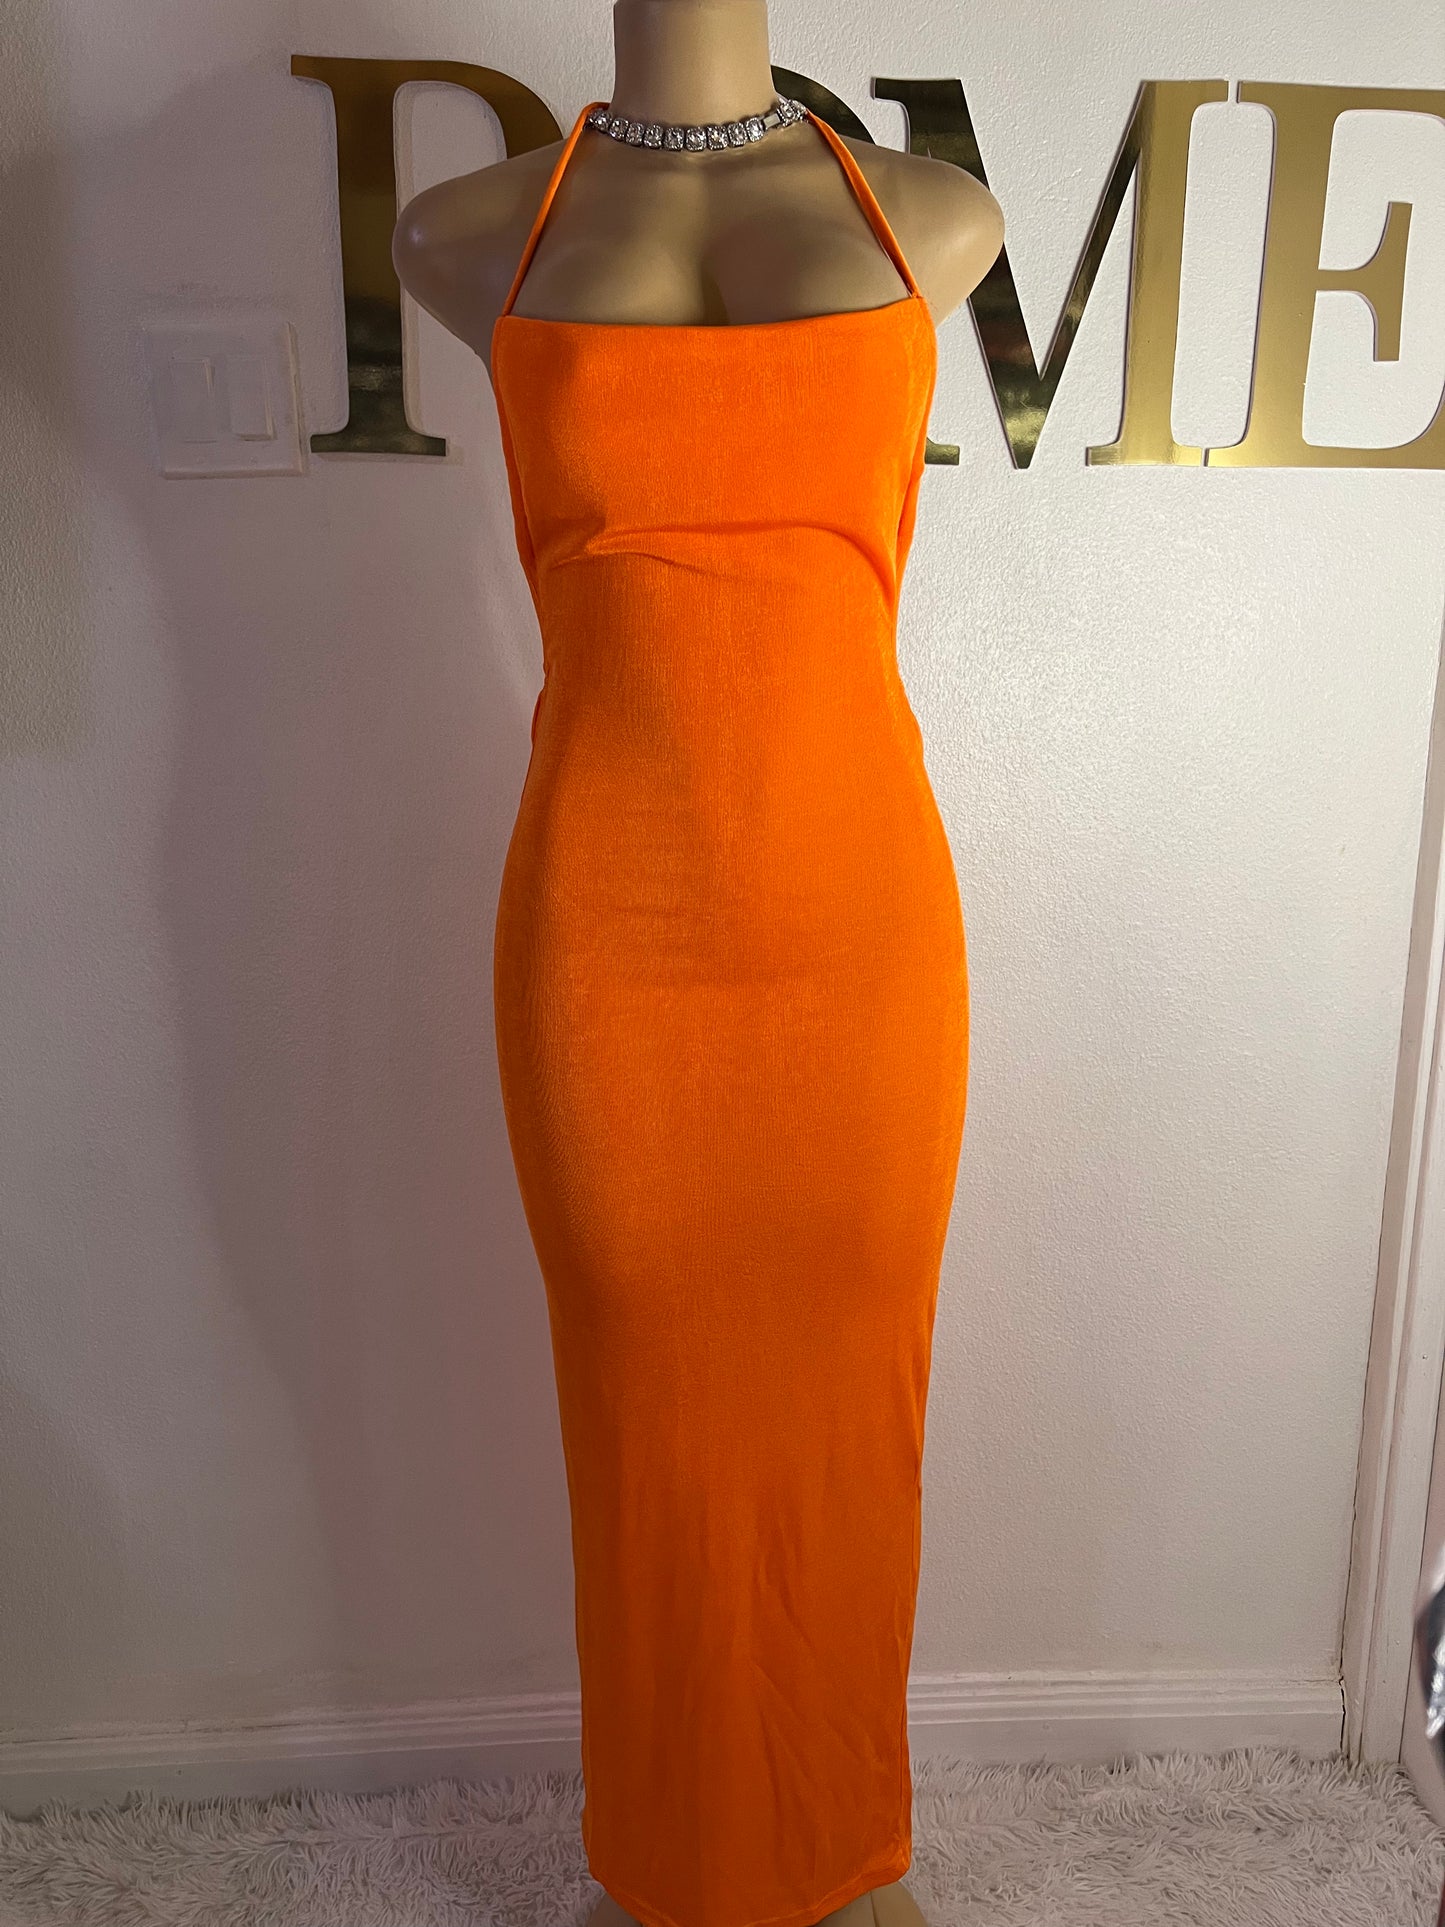 Carey Vibe Dress (Orange)